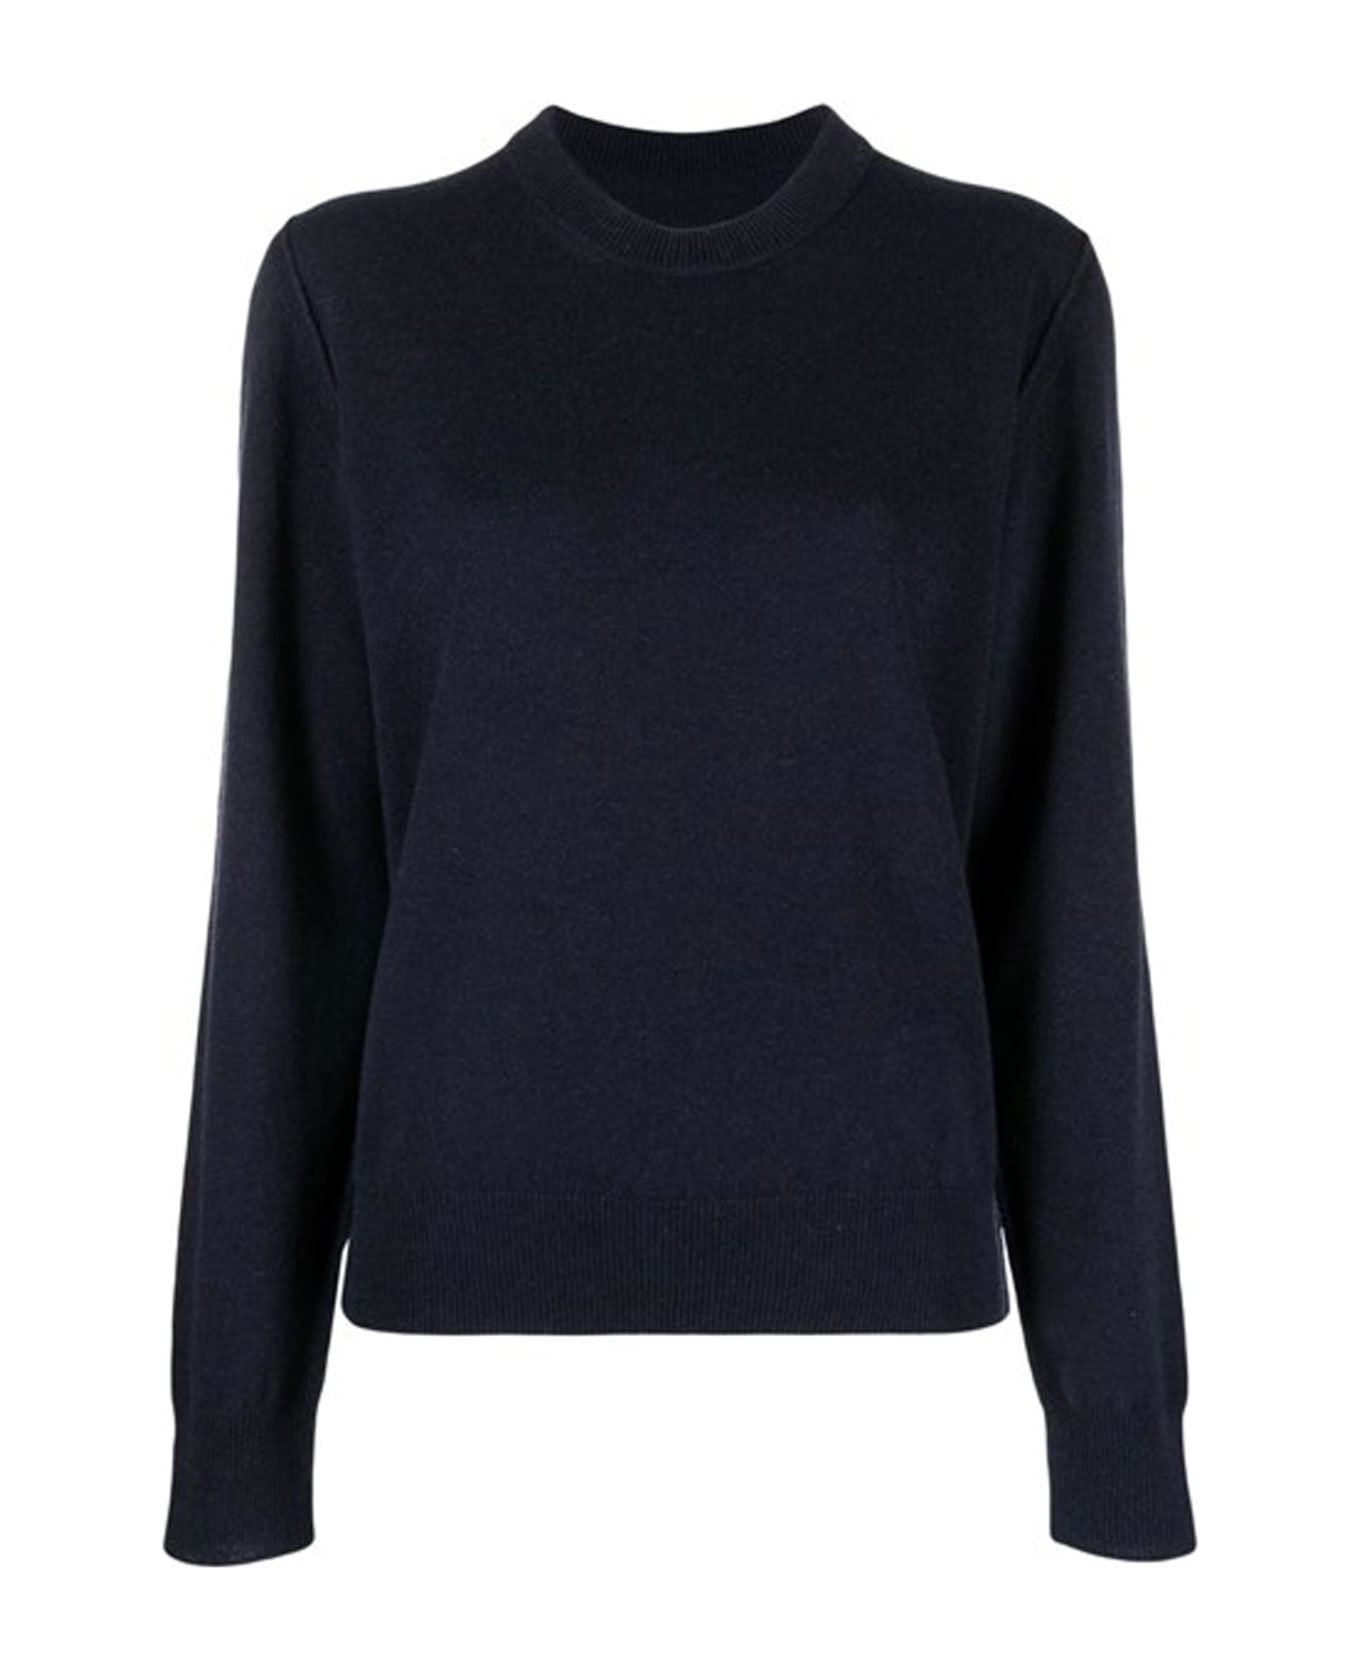 Maison Margiela Cashmere Sweater - Blue